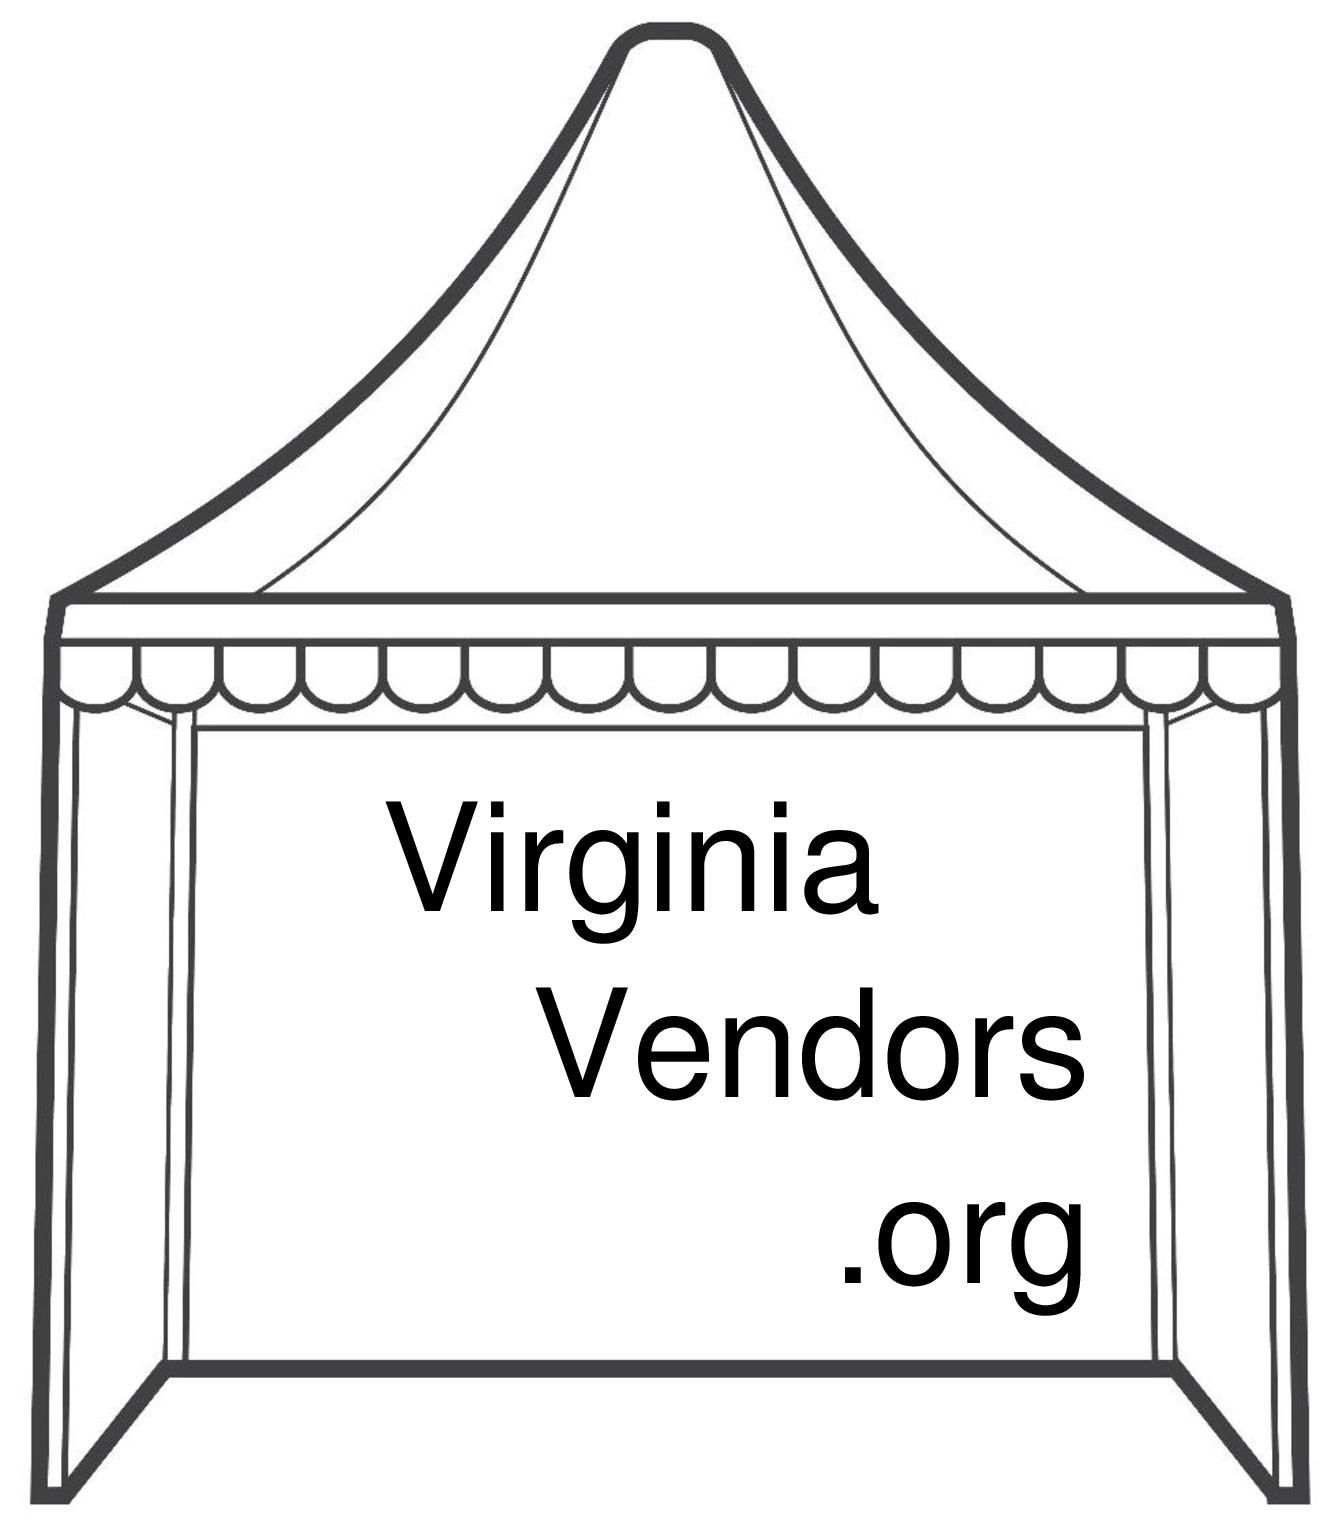 VIRGINIAVENDORS.ORG, vendors, events, table, business, register